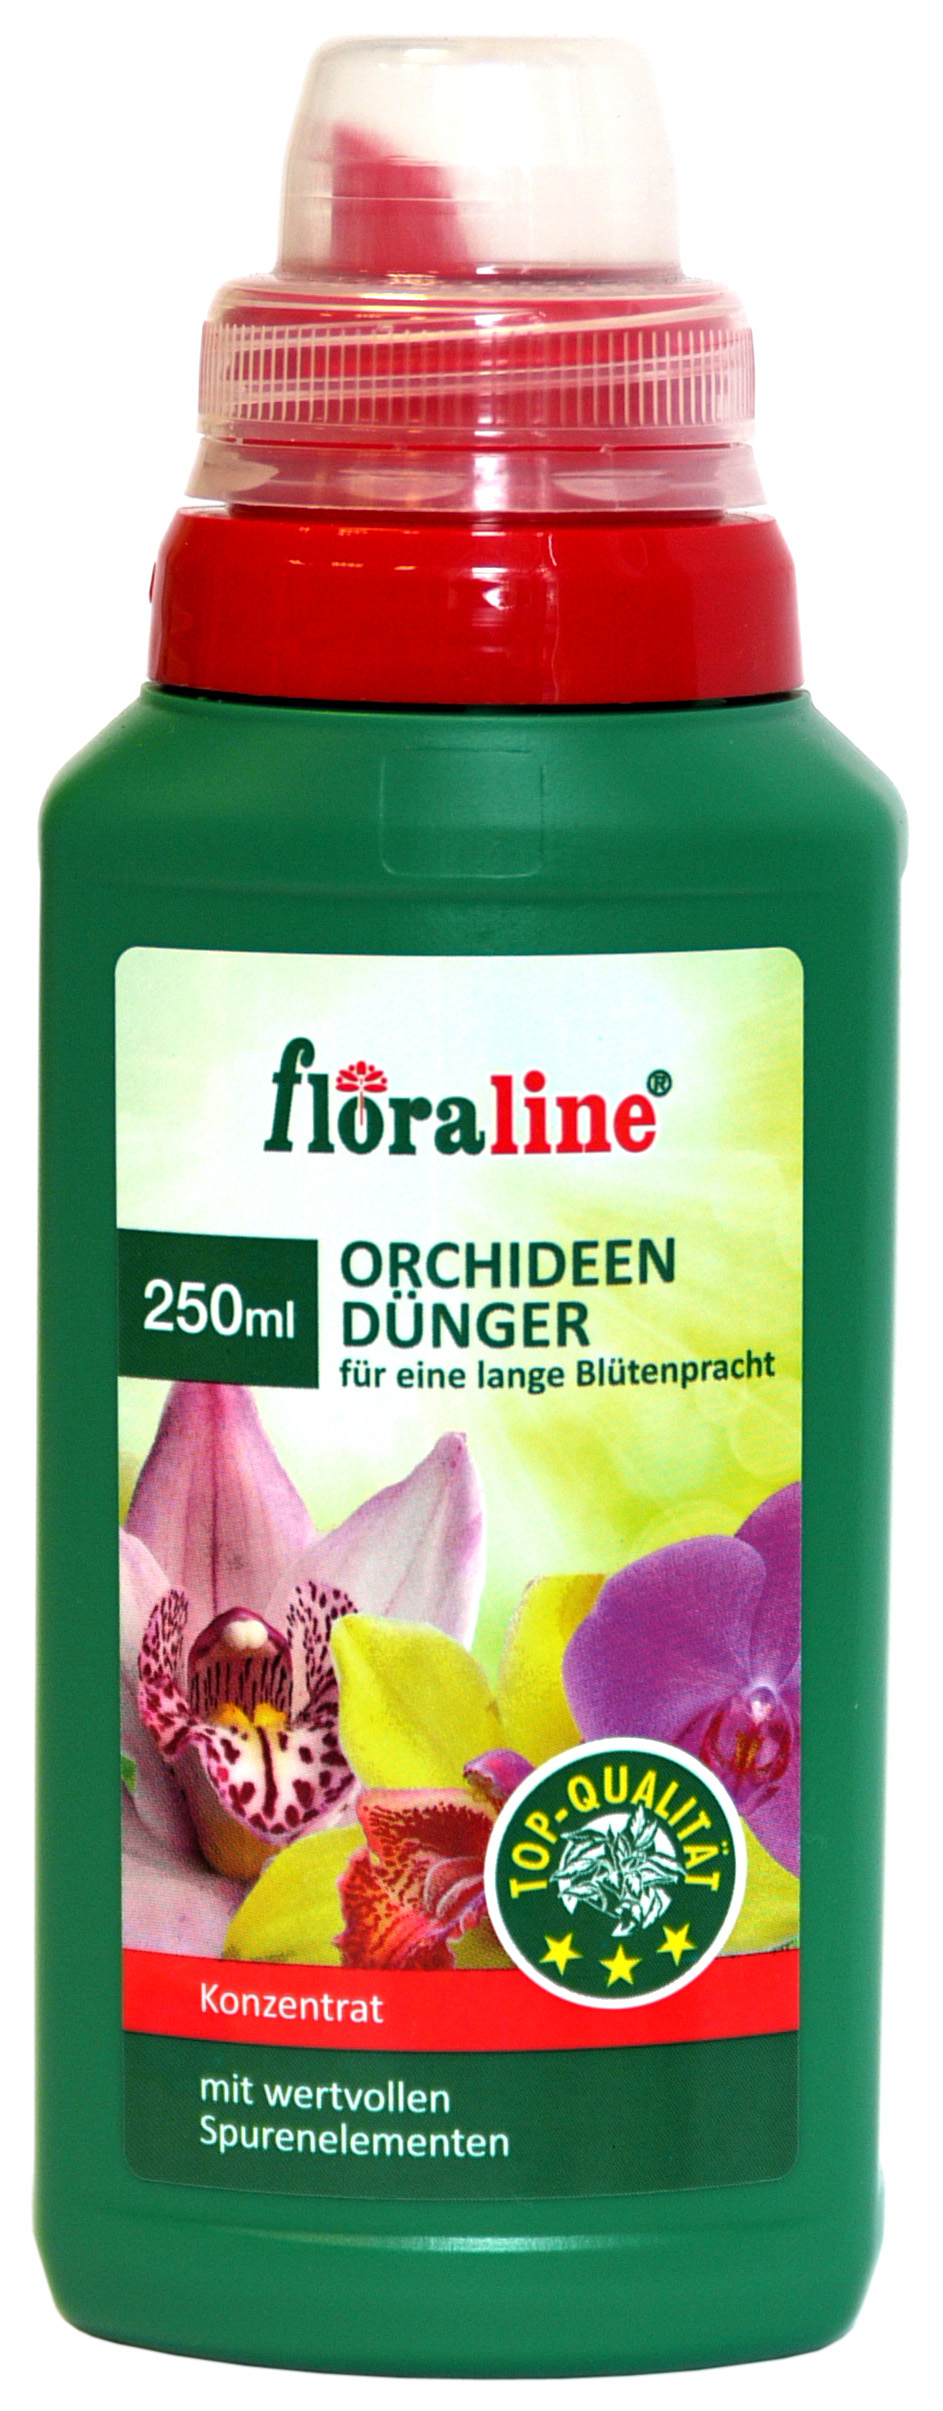 02205 - floraline Orchideendünger 250 ml